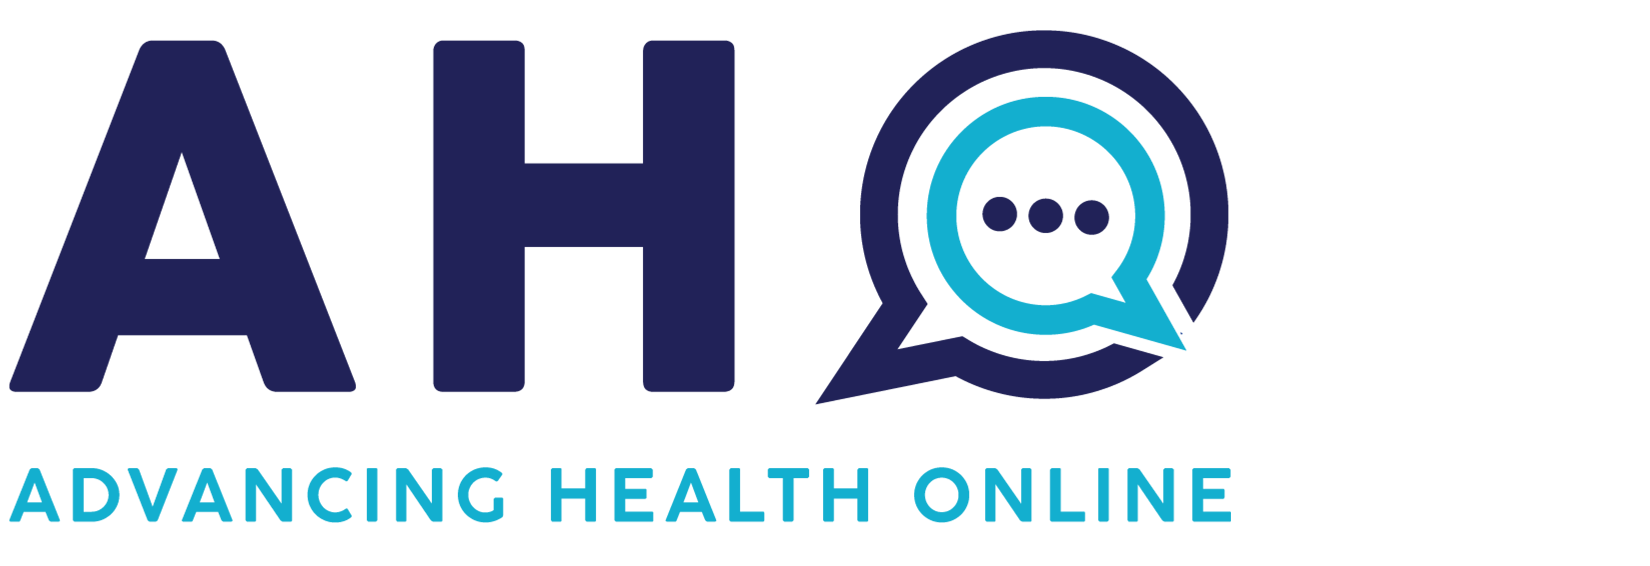 Advancing Health Online Initiative (AHO)